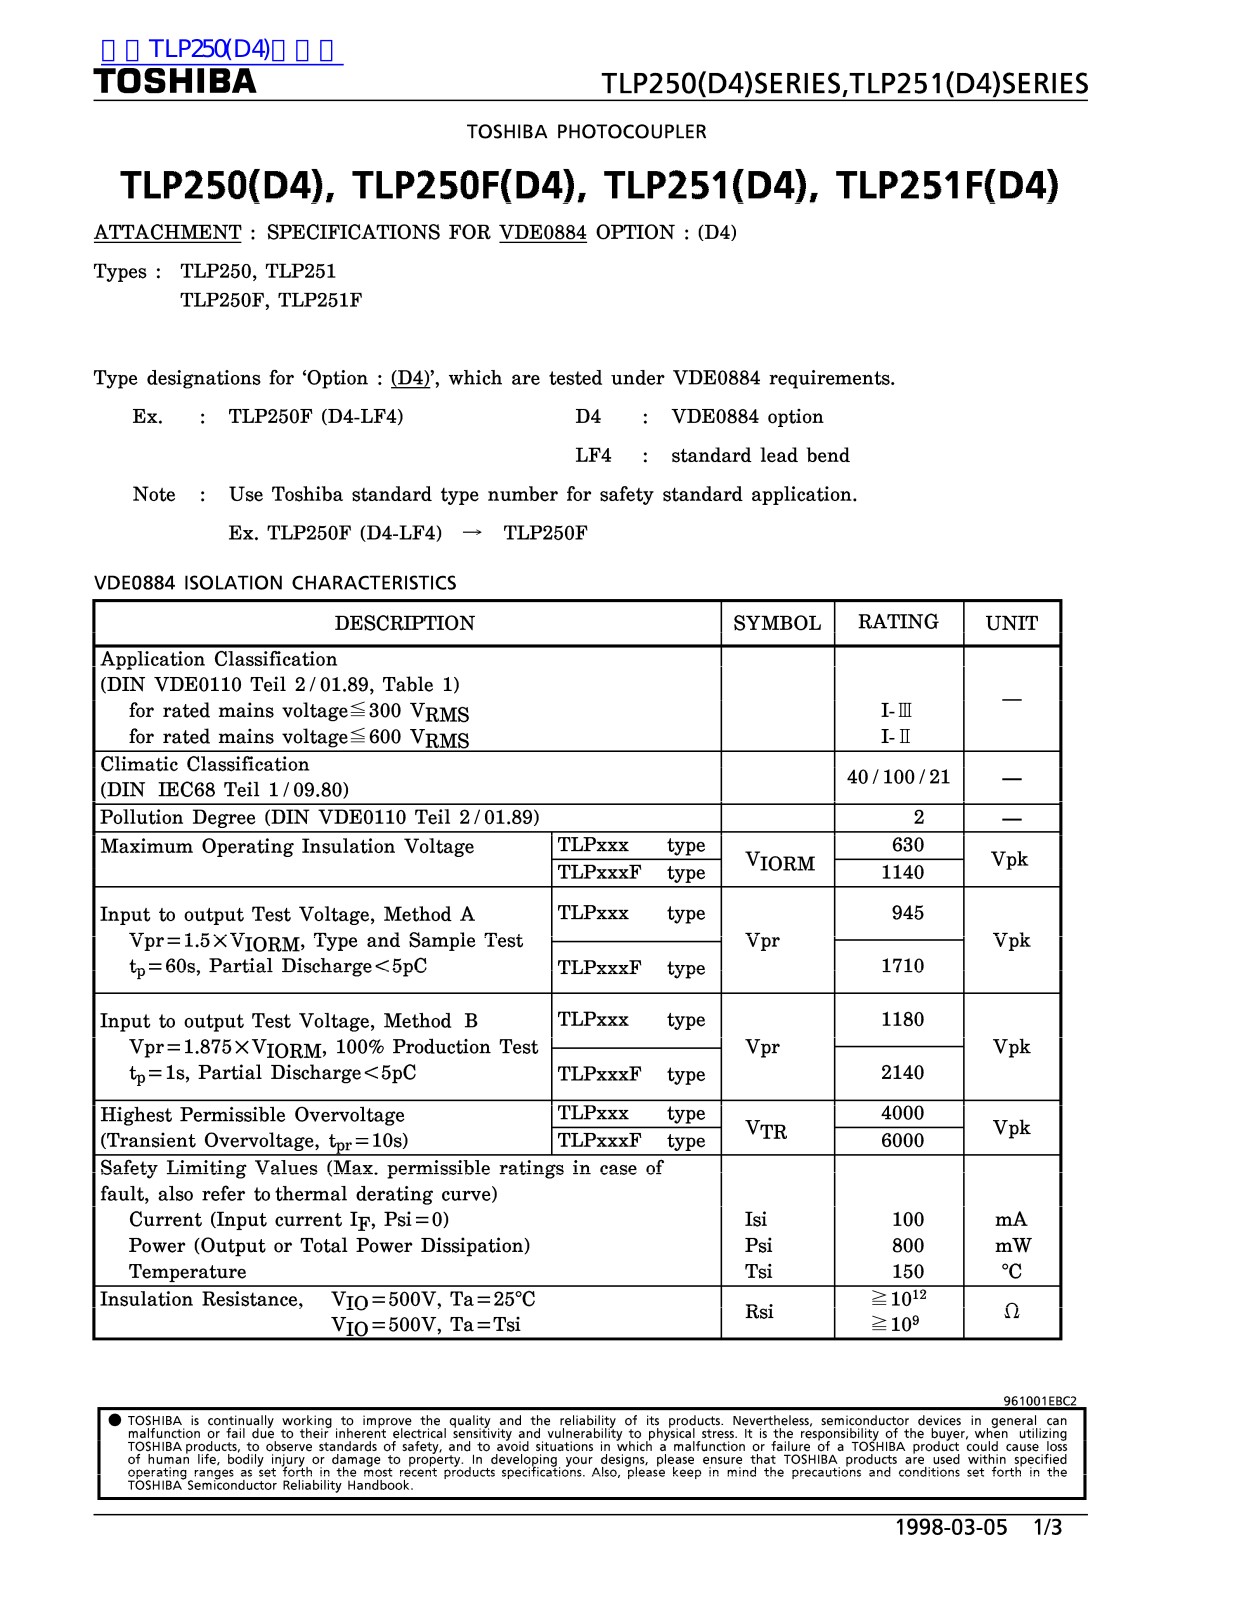 TOSHIBA TLP250-D4, TLP250F-D4, TLP251-D4, TLP251F-D4 Technical data